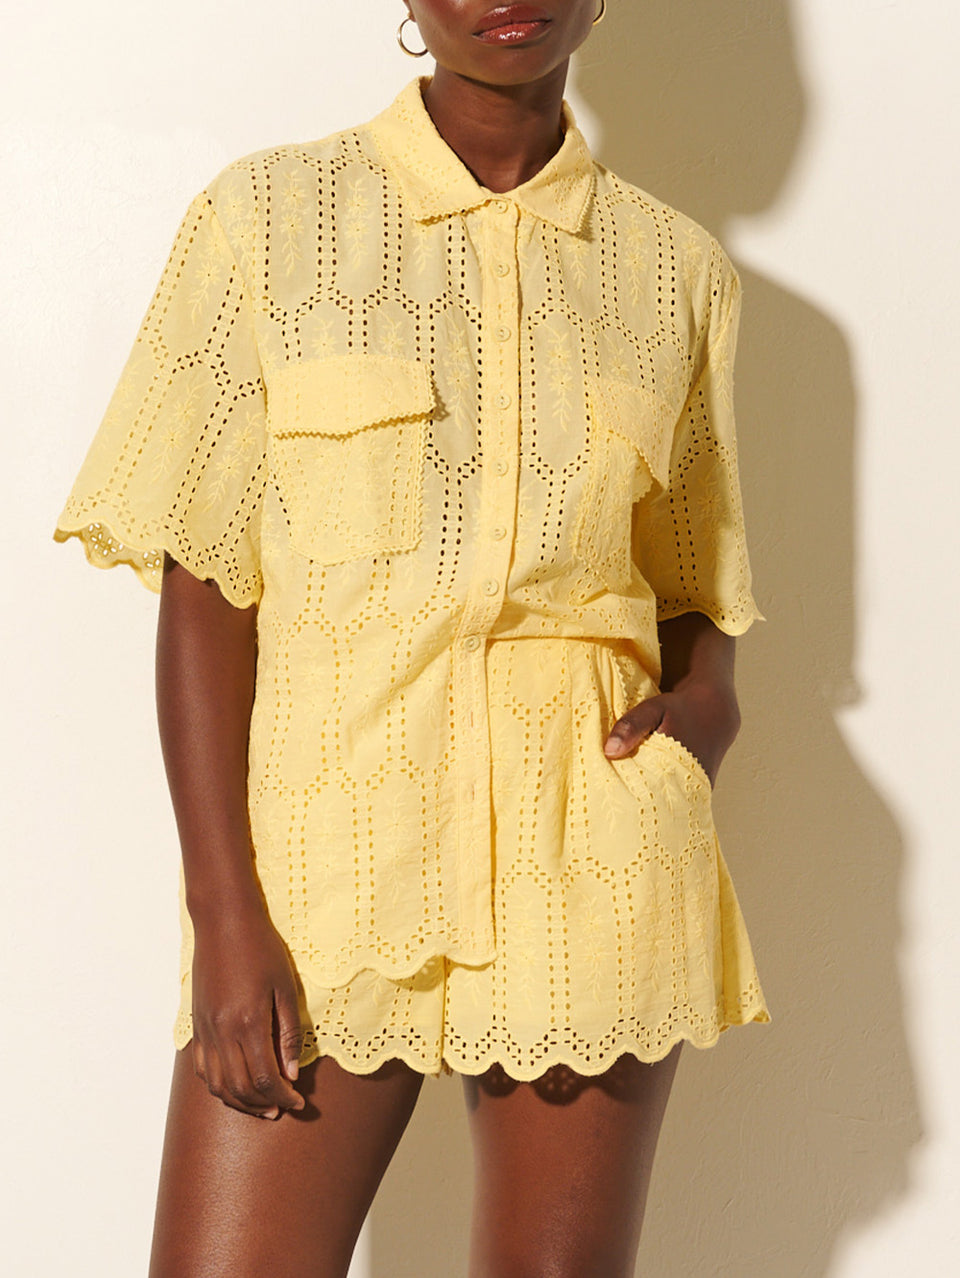 Estelle Short KIVARI | Model wears yellow shorts